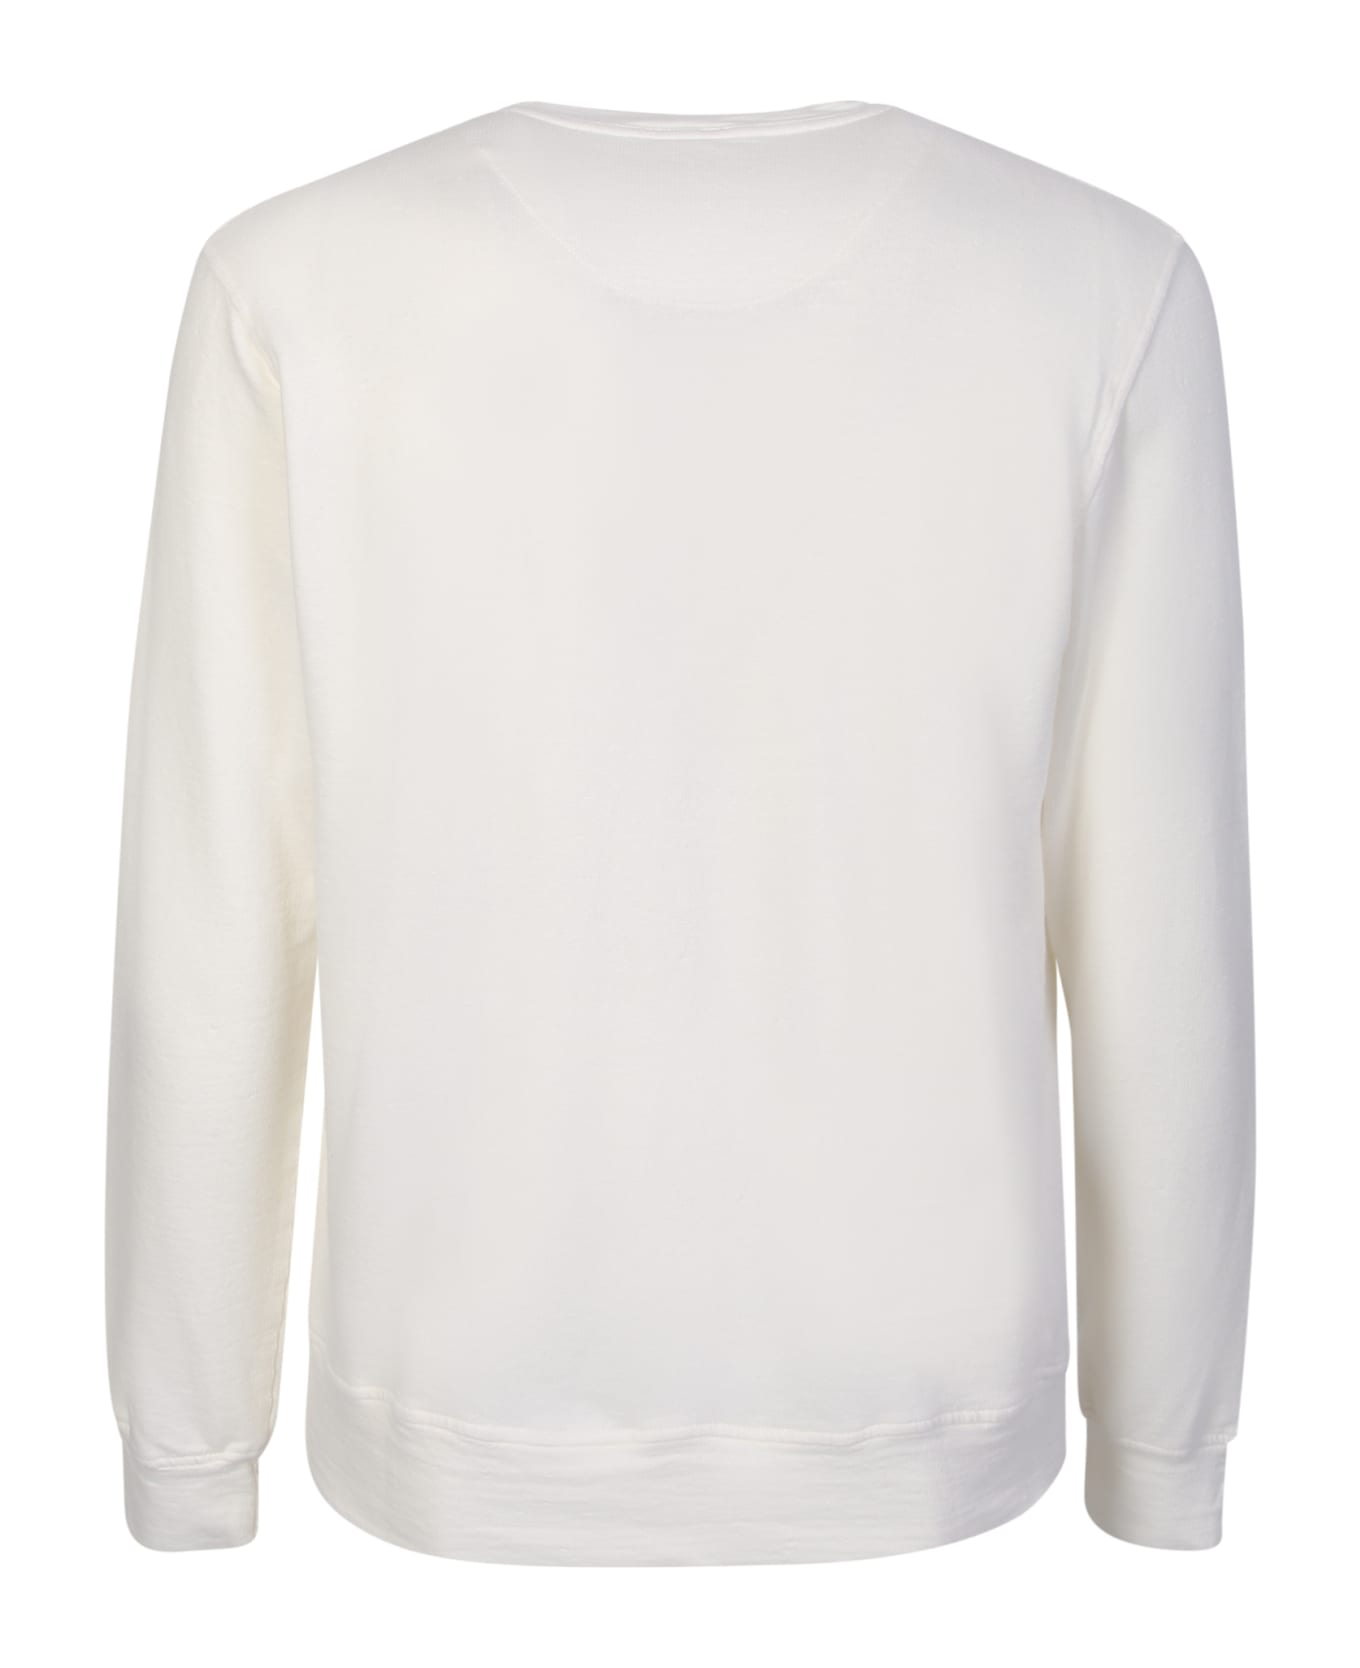 Original Vintage Style White Linen Sweatshirt - White